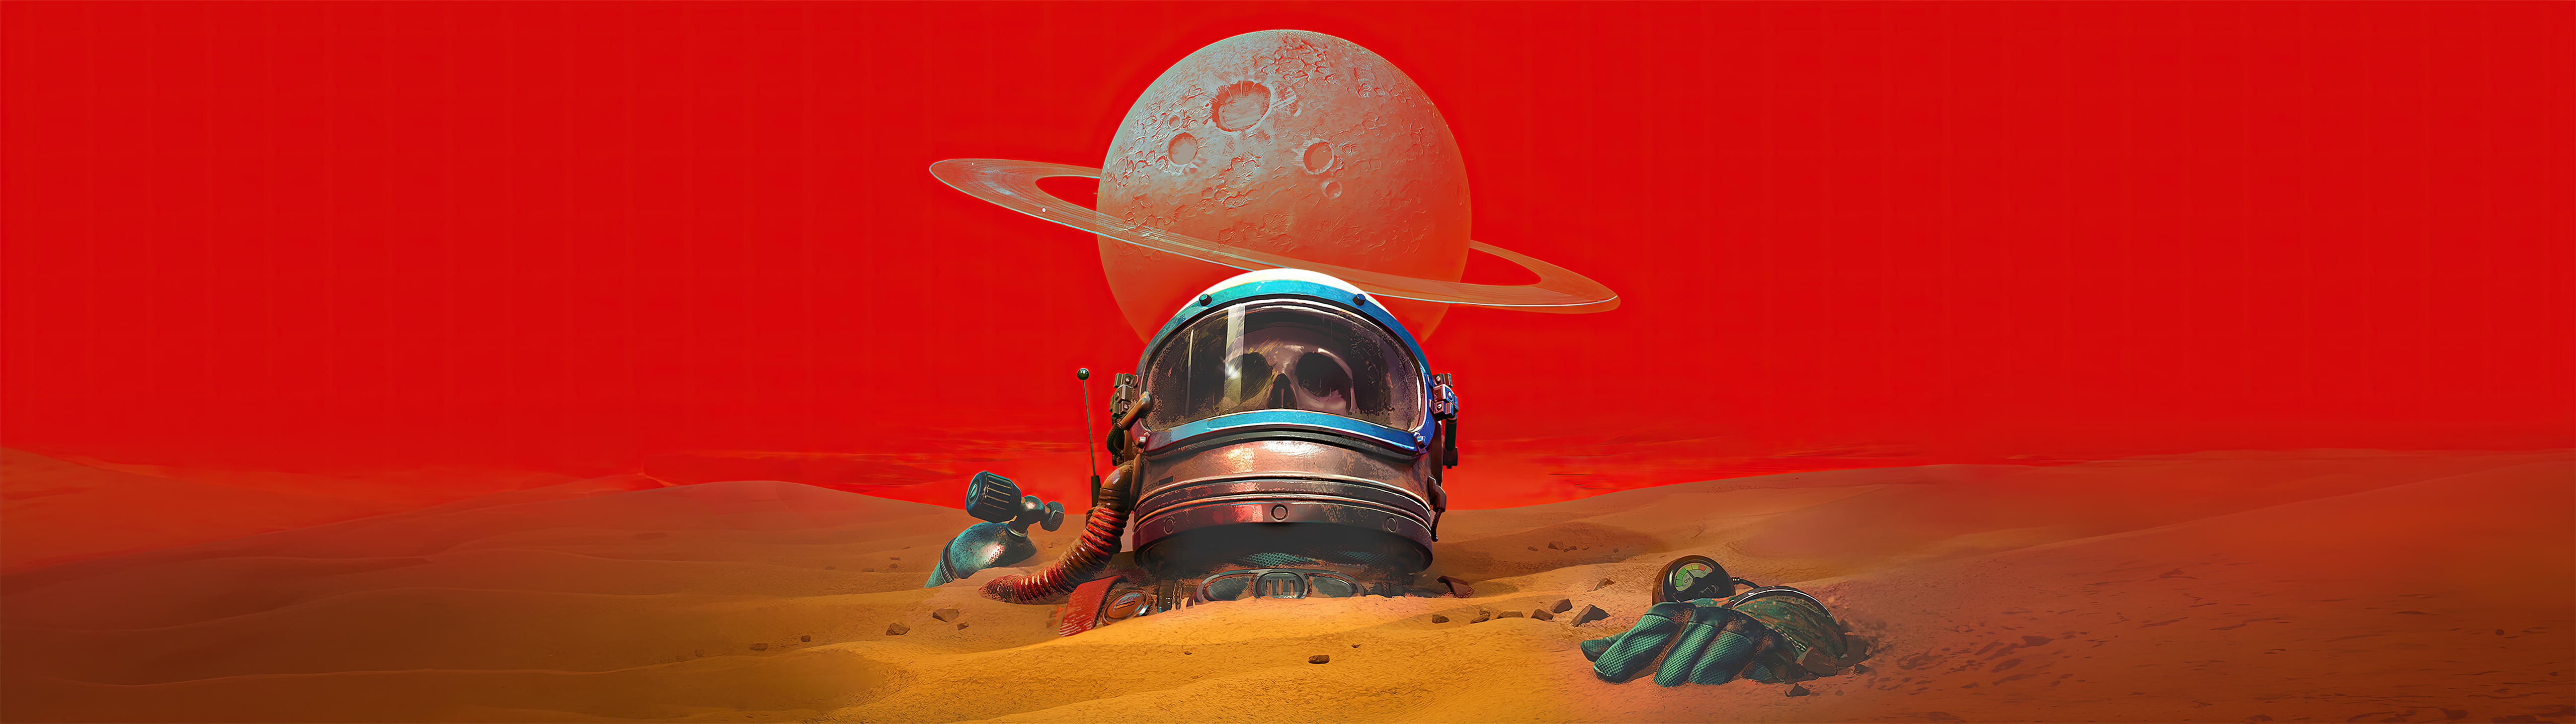 General 5120x1440 video game art ultrawide wide screen spacesuit helmet astronaut simple background planet minimalism sand